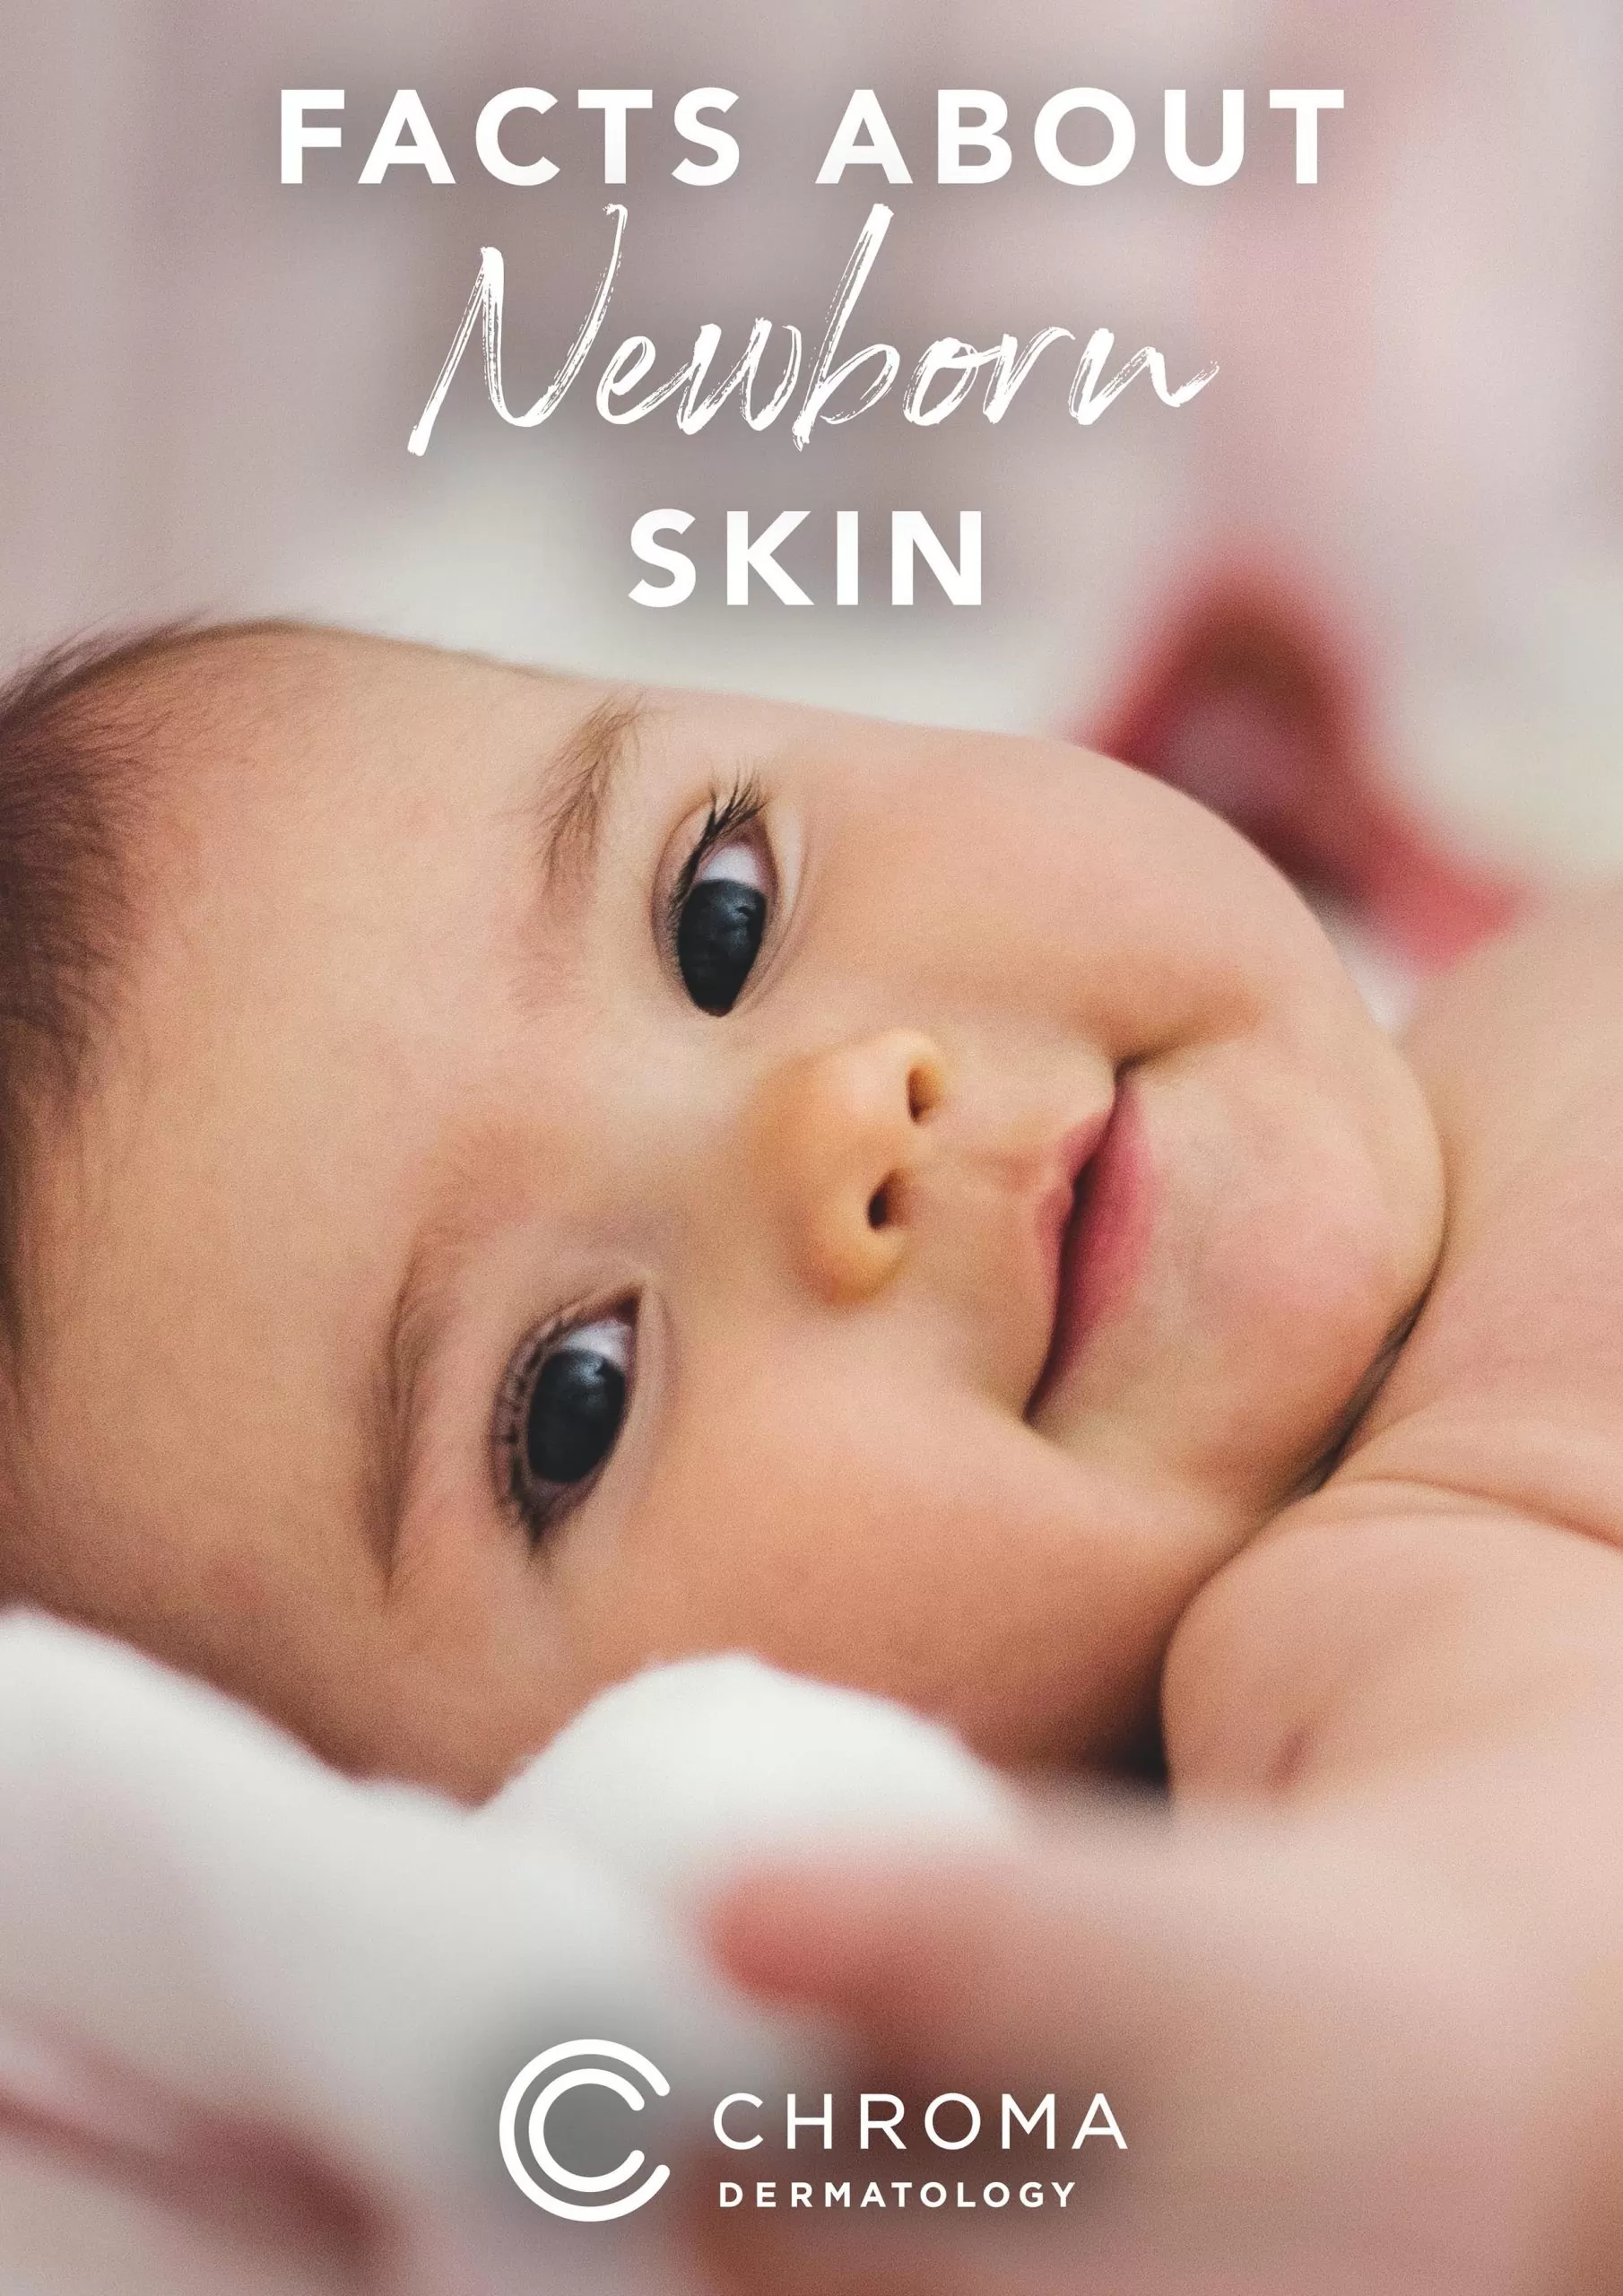 https://www.chromaderm.com.au/wp-content/webp-express/webp-images/uploads/2021/04/Facts-about-newborn-skin-melbourne-dermatologist-scaled.jpg.webp